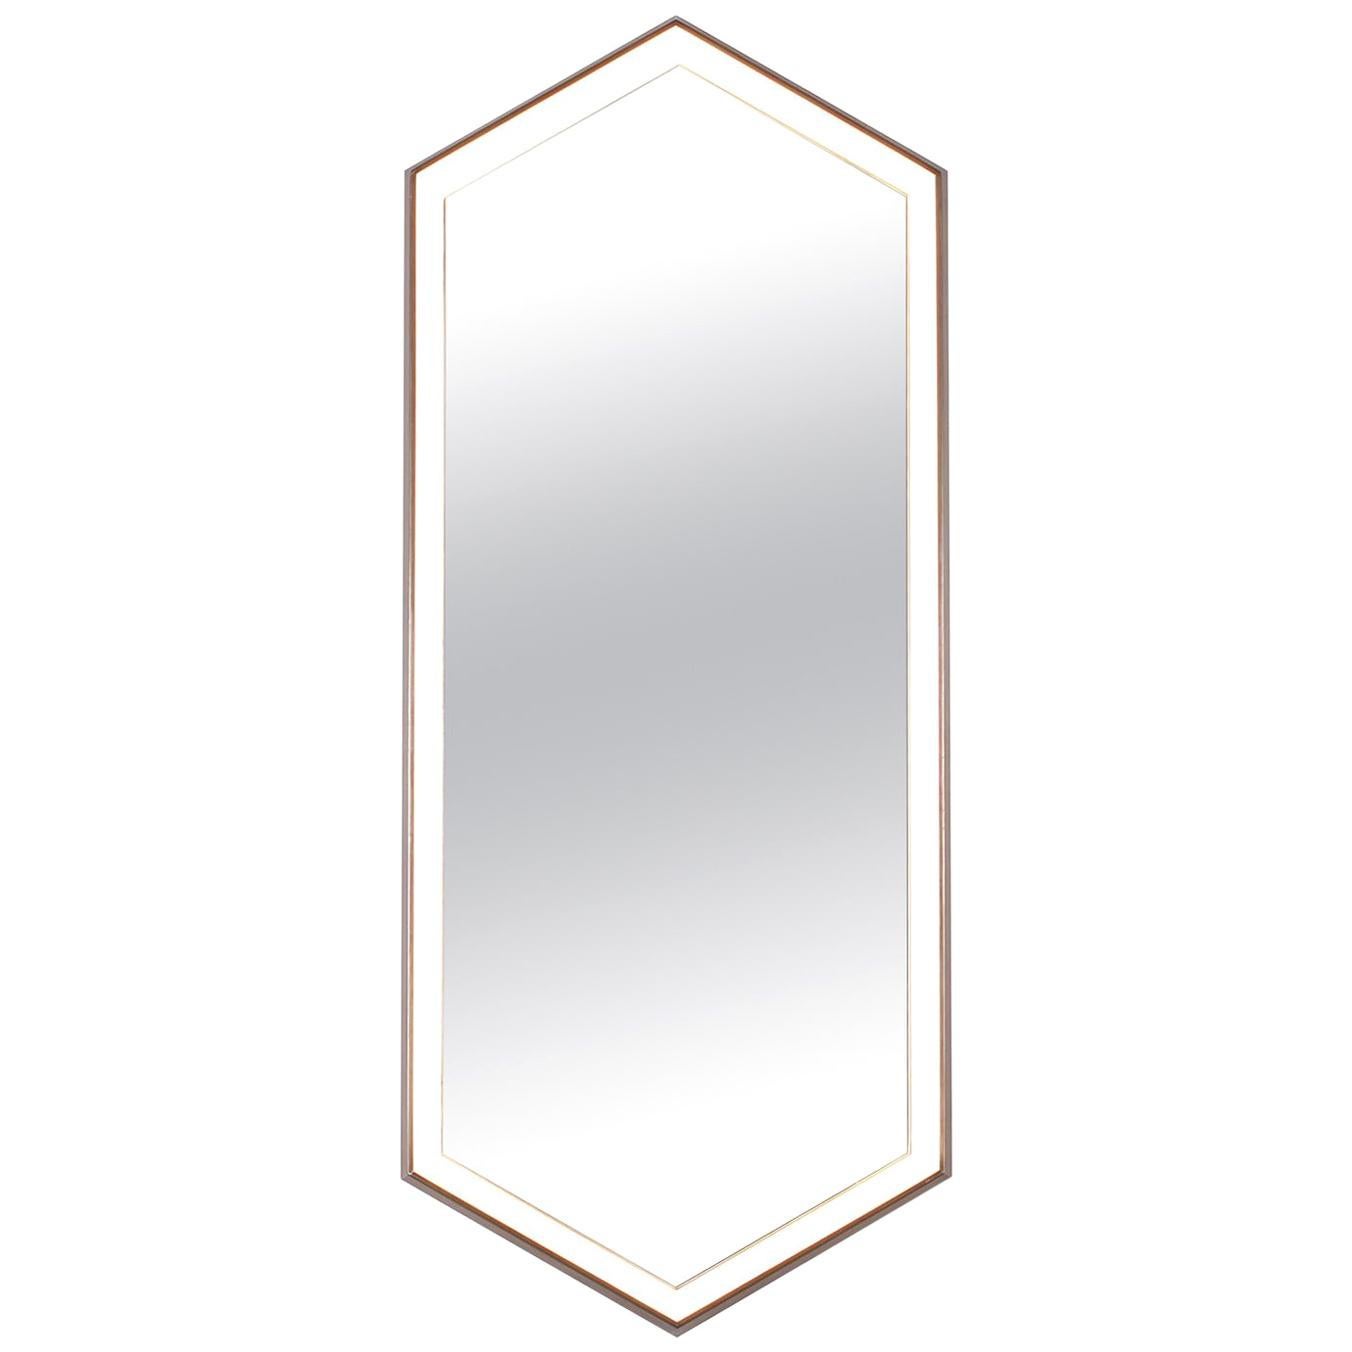 Kruos Mirror LM46 Hexagonal Edge Lit Vanity Powder Room or Makeup Mirror